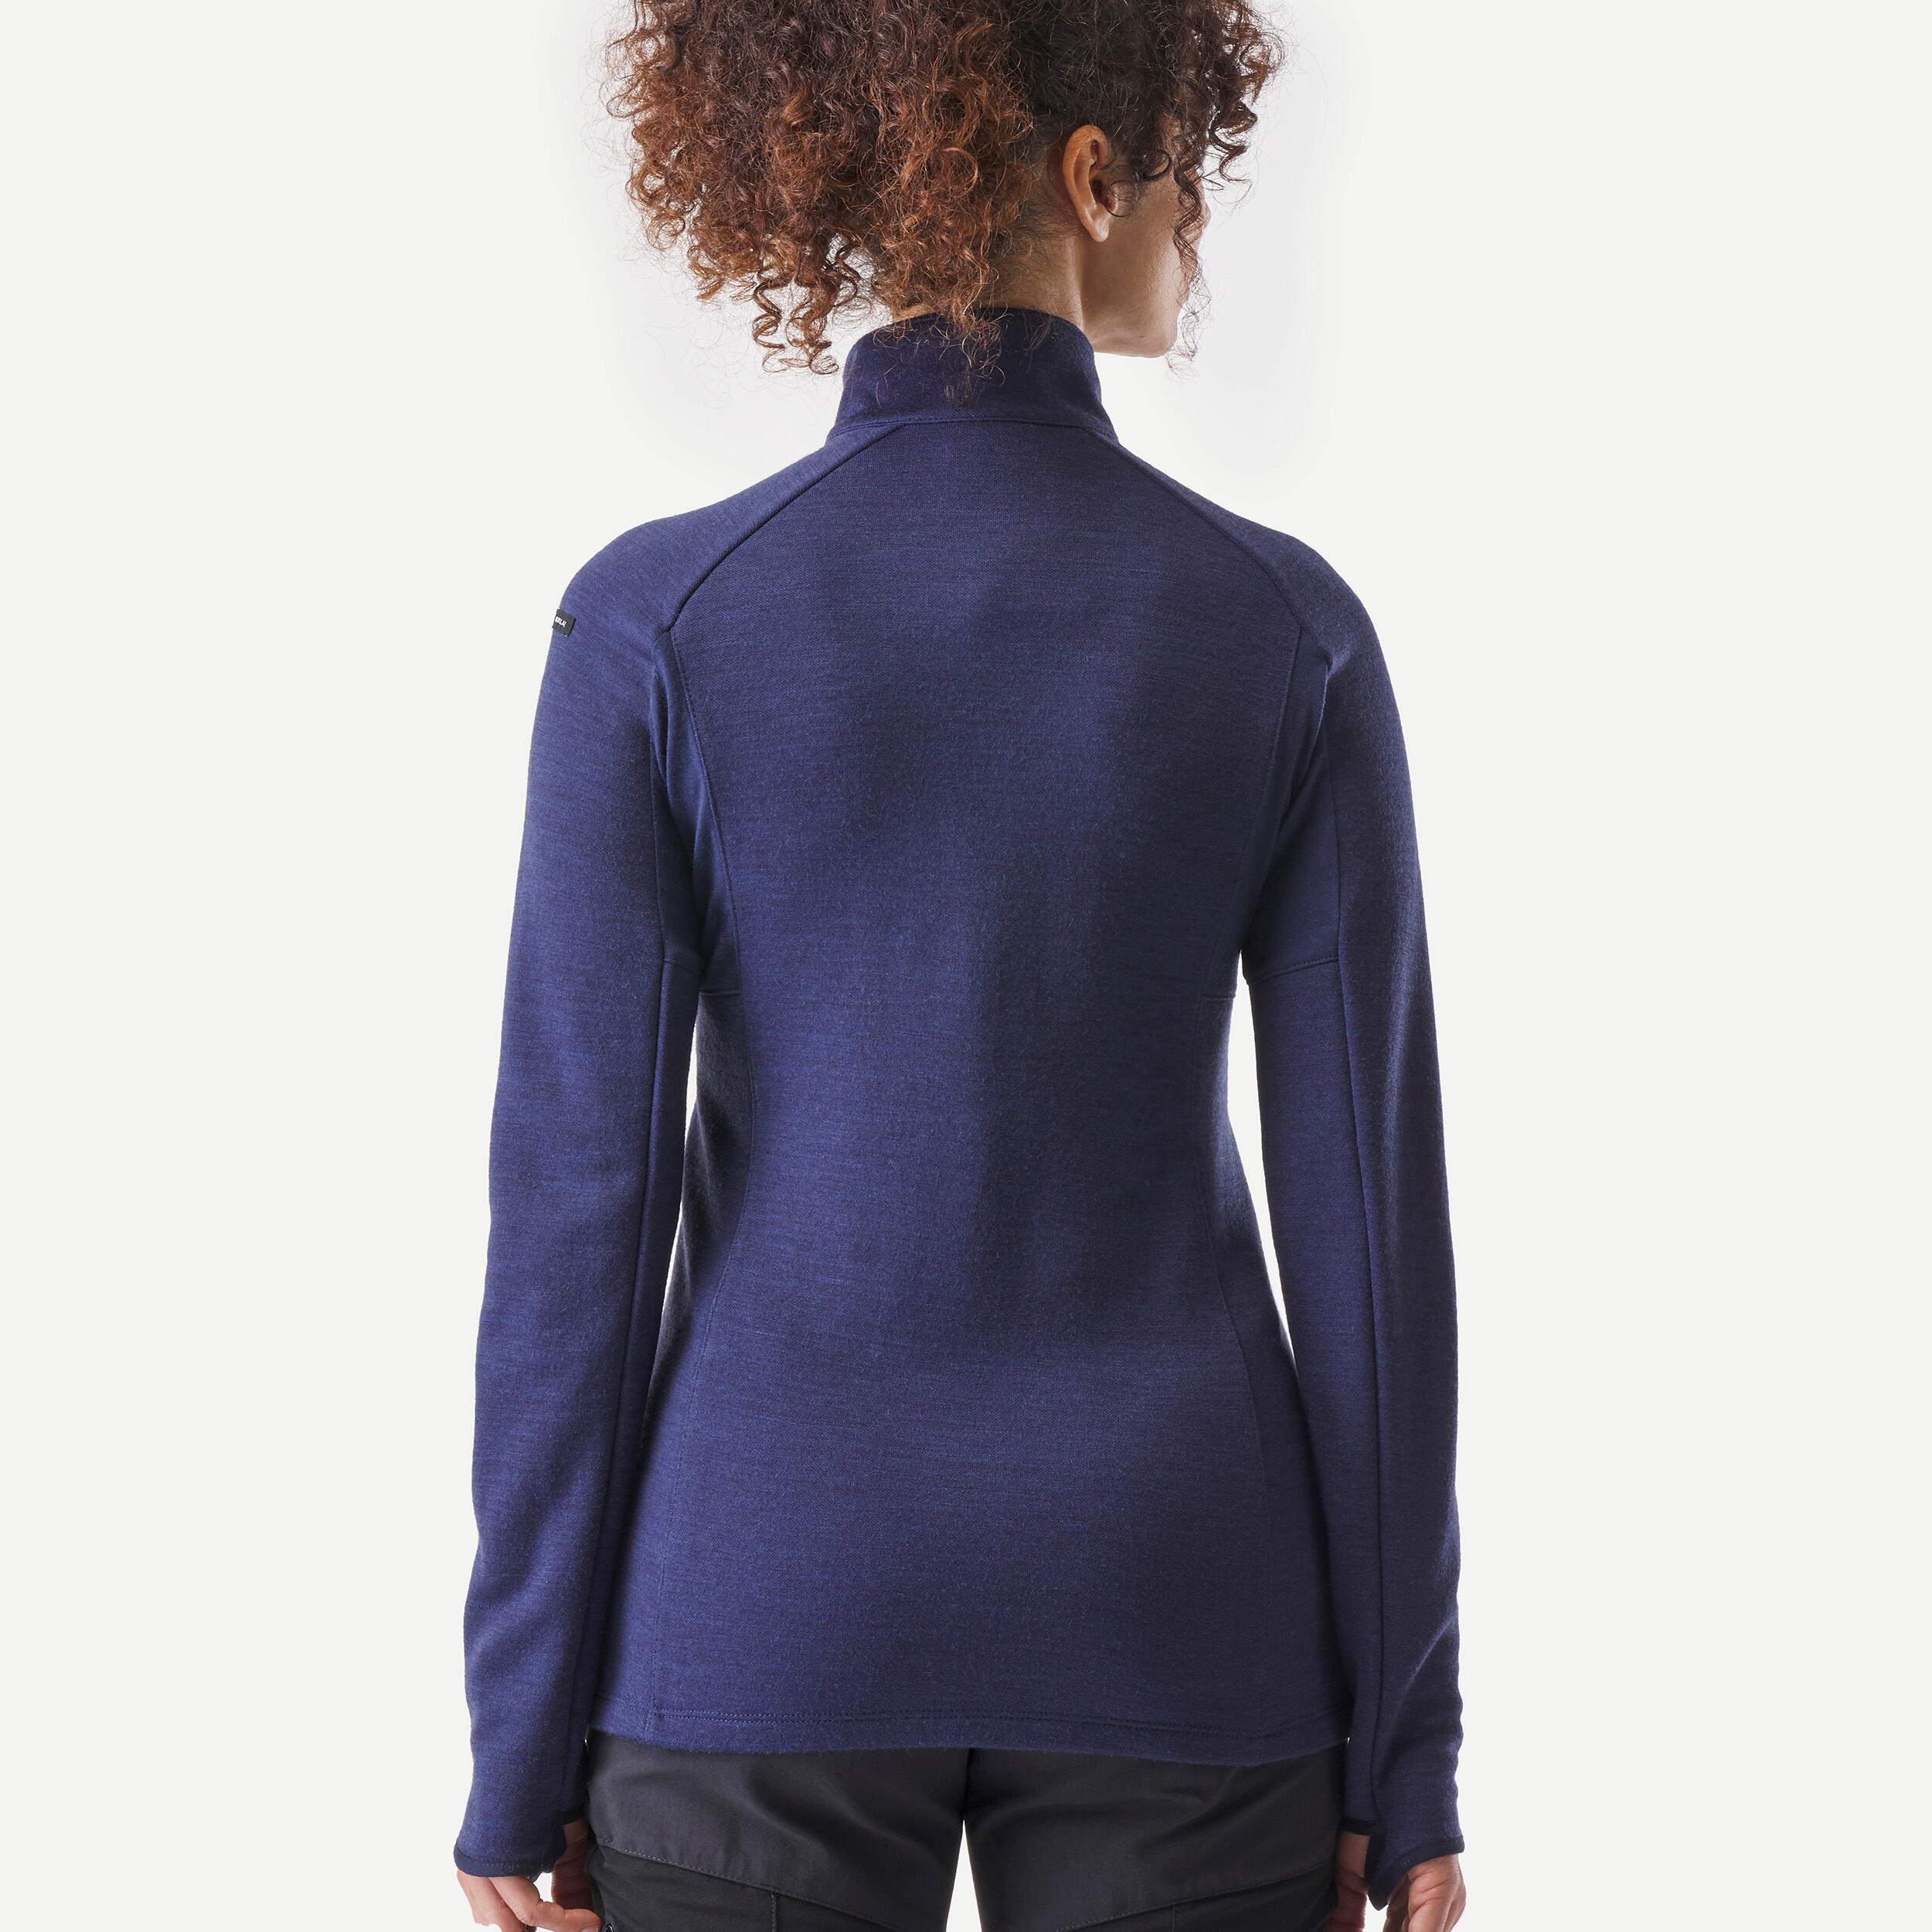 Chandail en laine mérinos femme – Trek 900 bleu - FORCLAZ